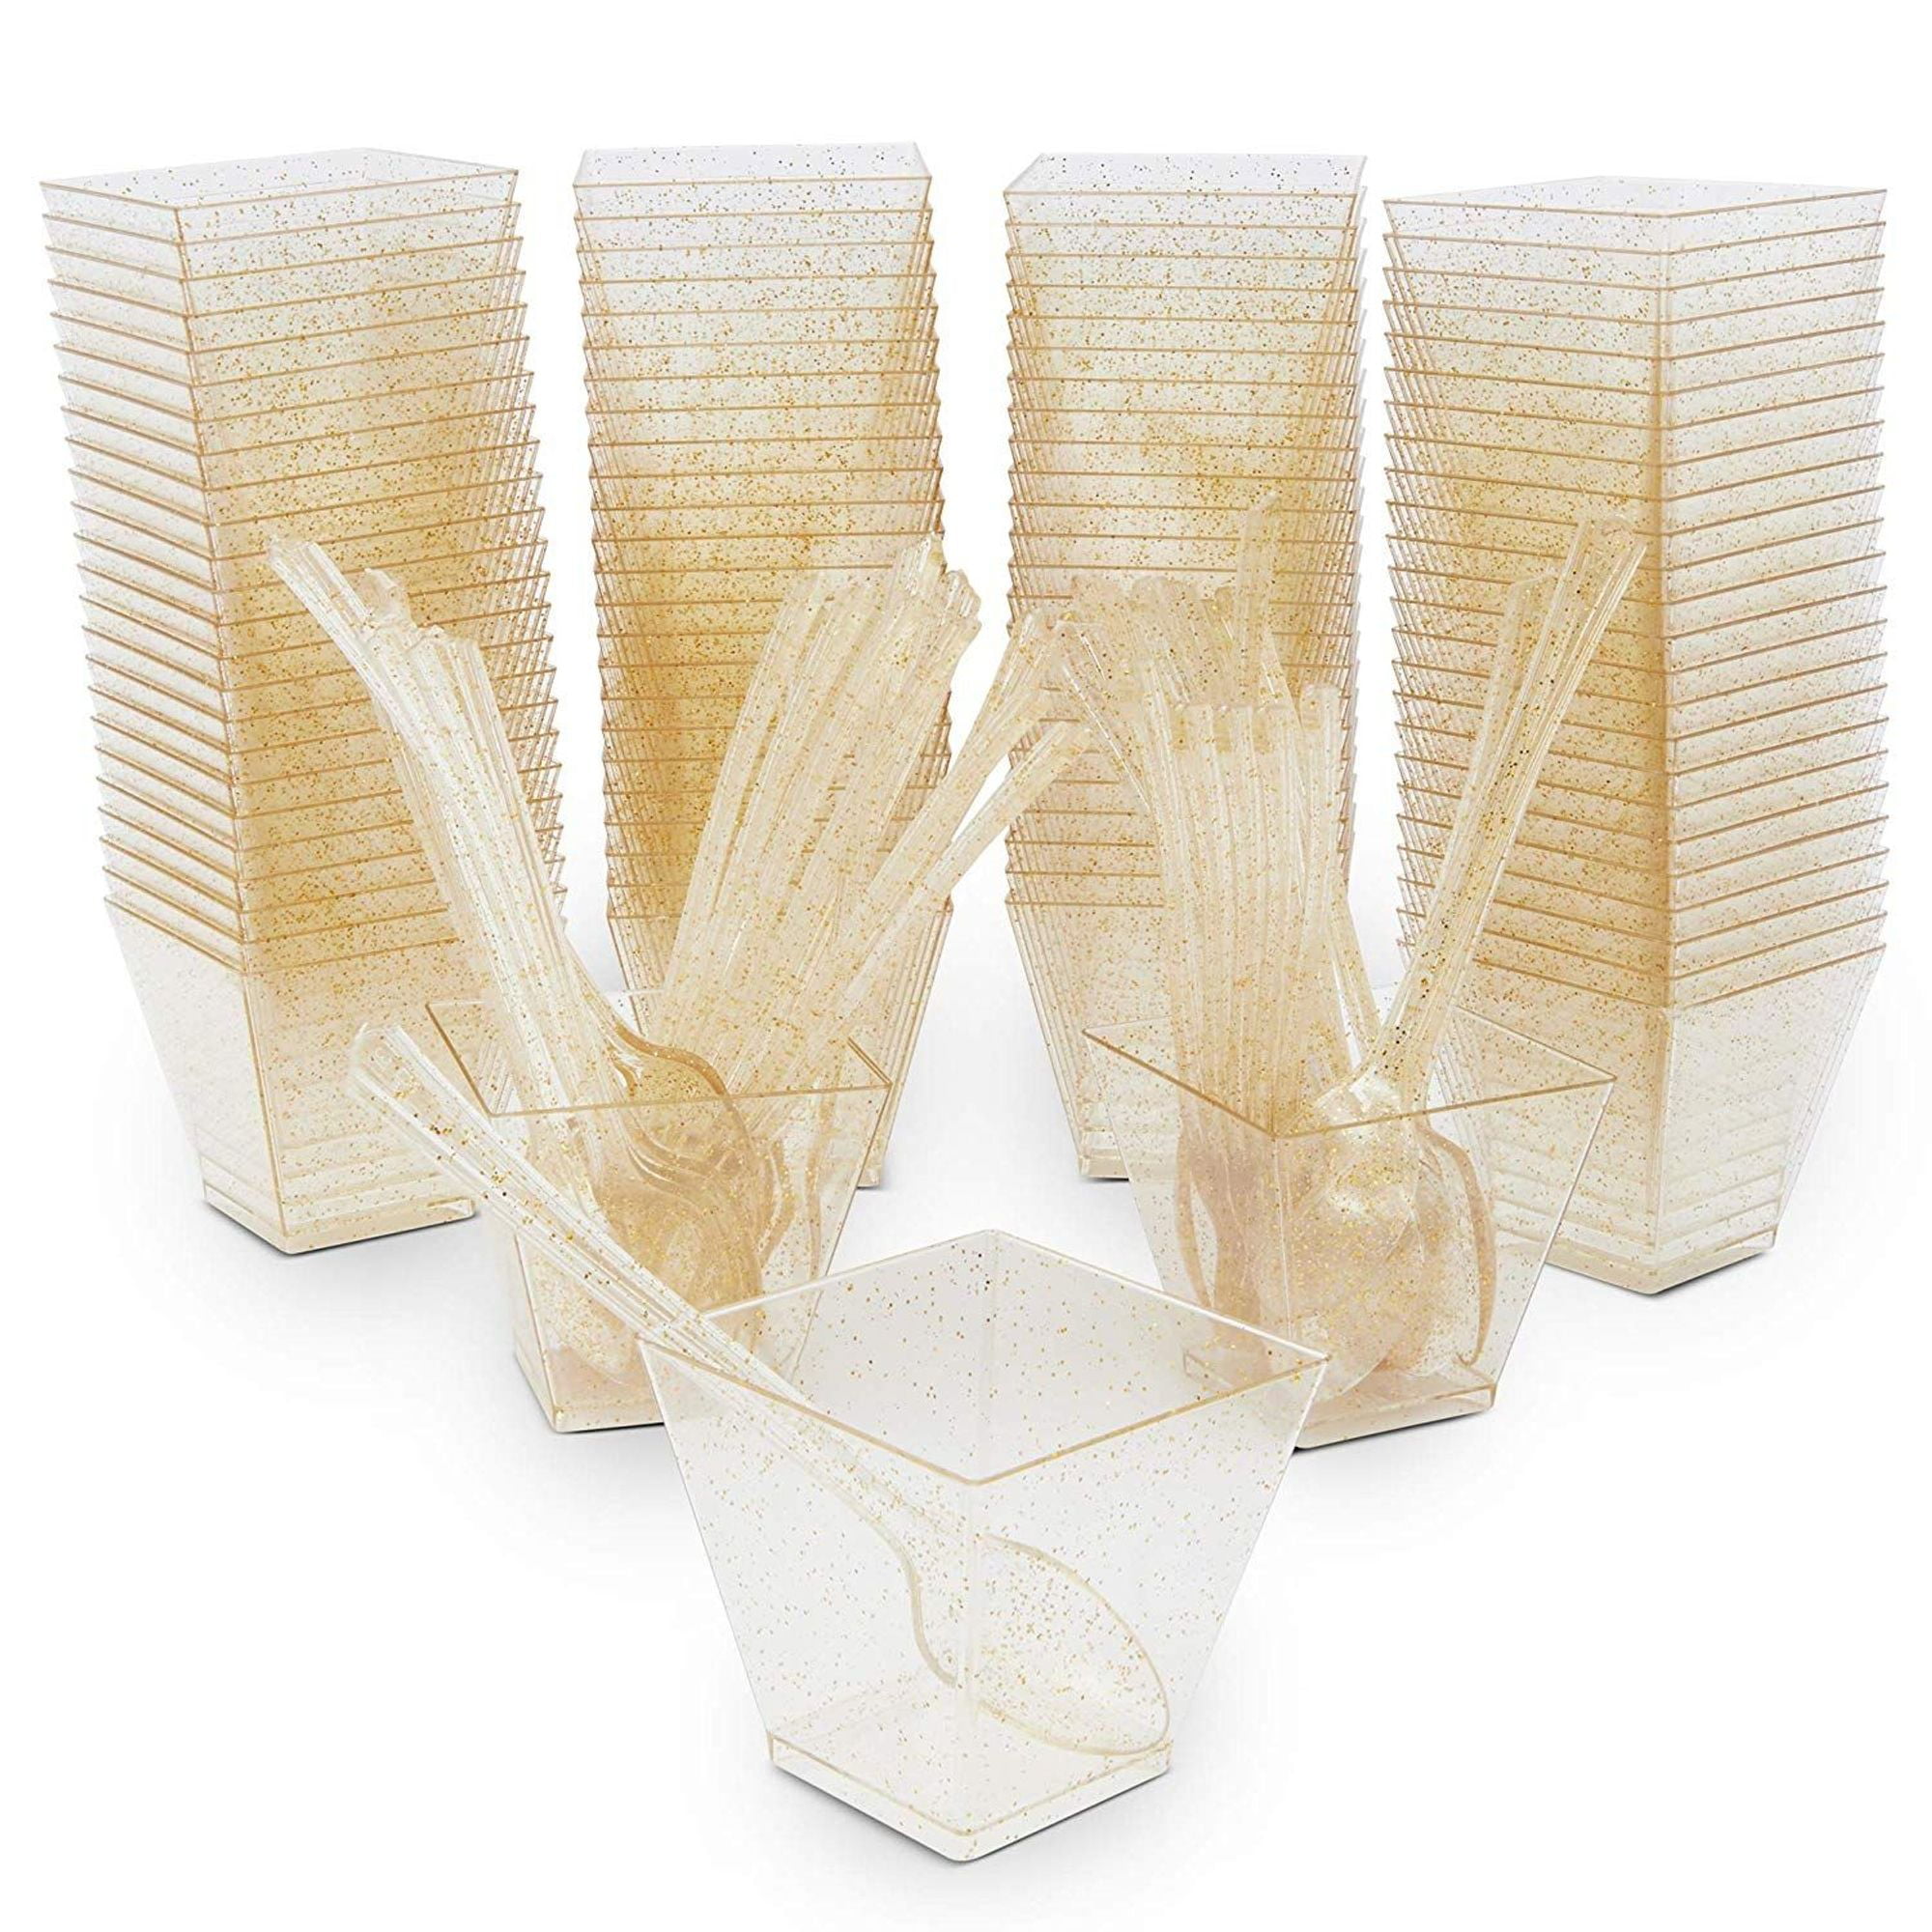 Details about   100 Pieces Small Disposable Square Cups 2Oz & 100Pieces Gold Mini Spoons Plastic